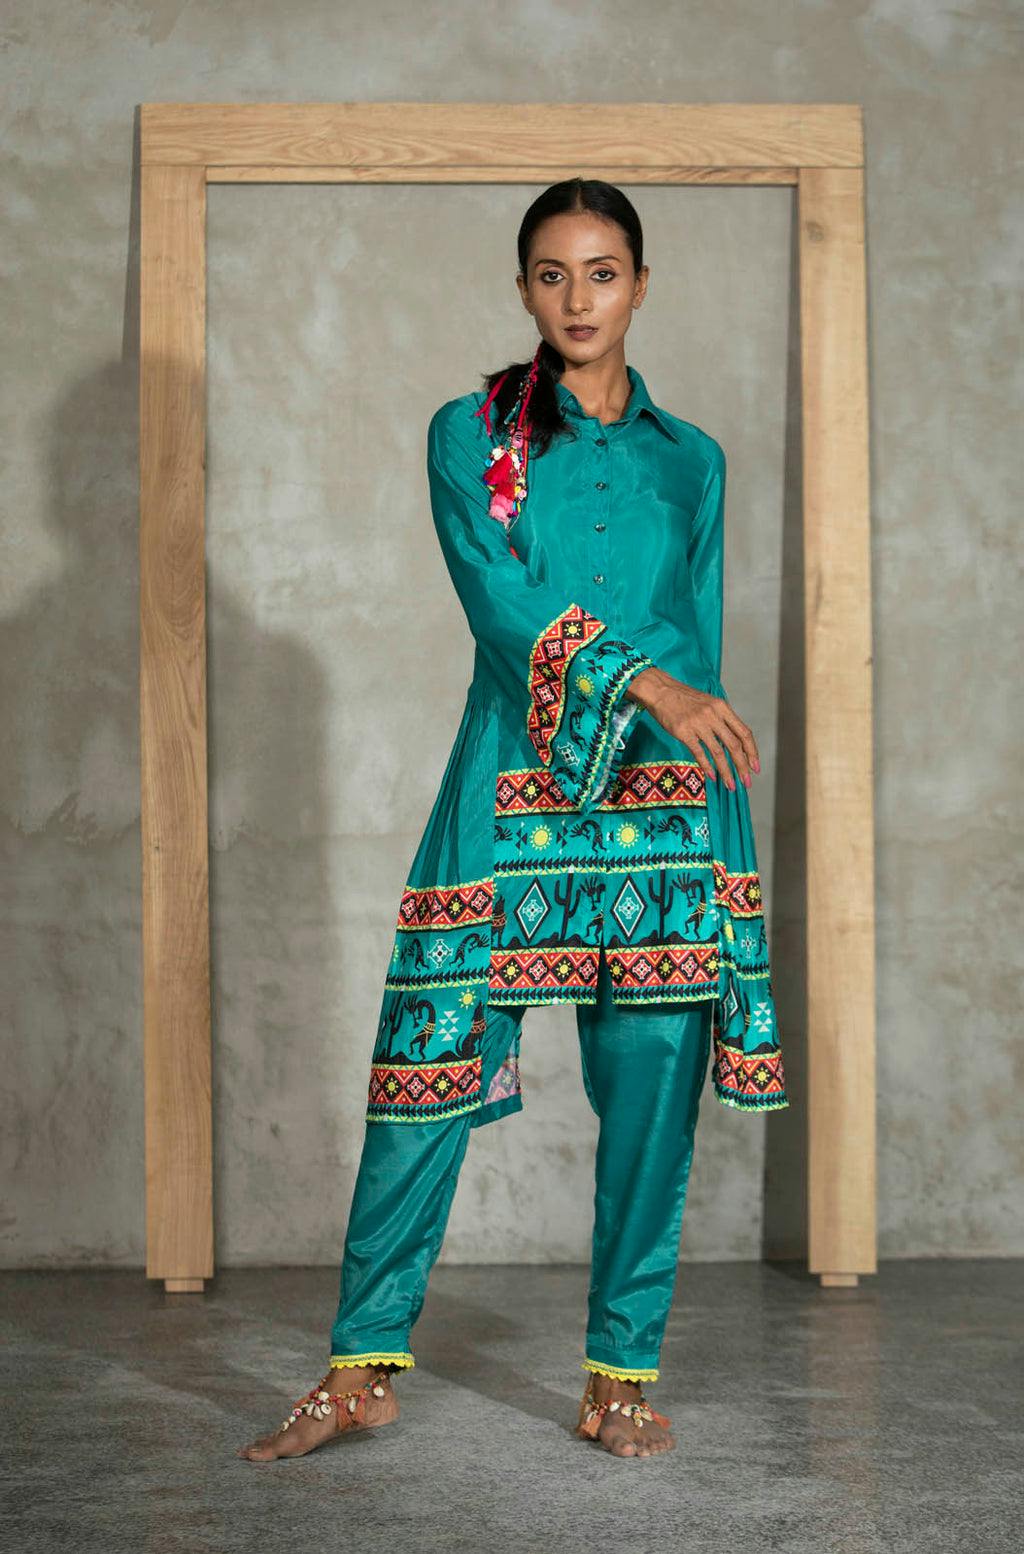 Jabali Gathered Tunic With Pants, a product by COEUR by Ankita Khurana